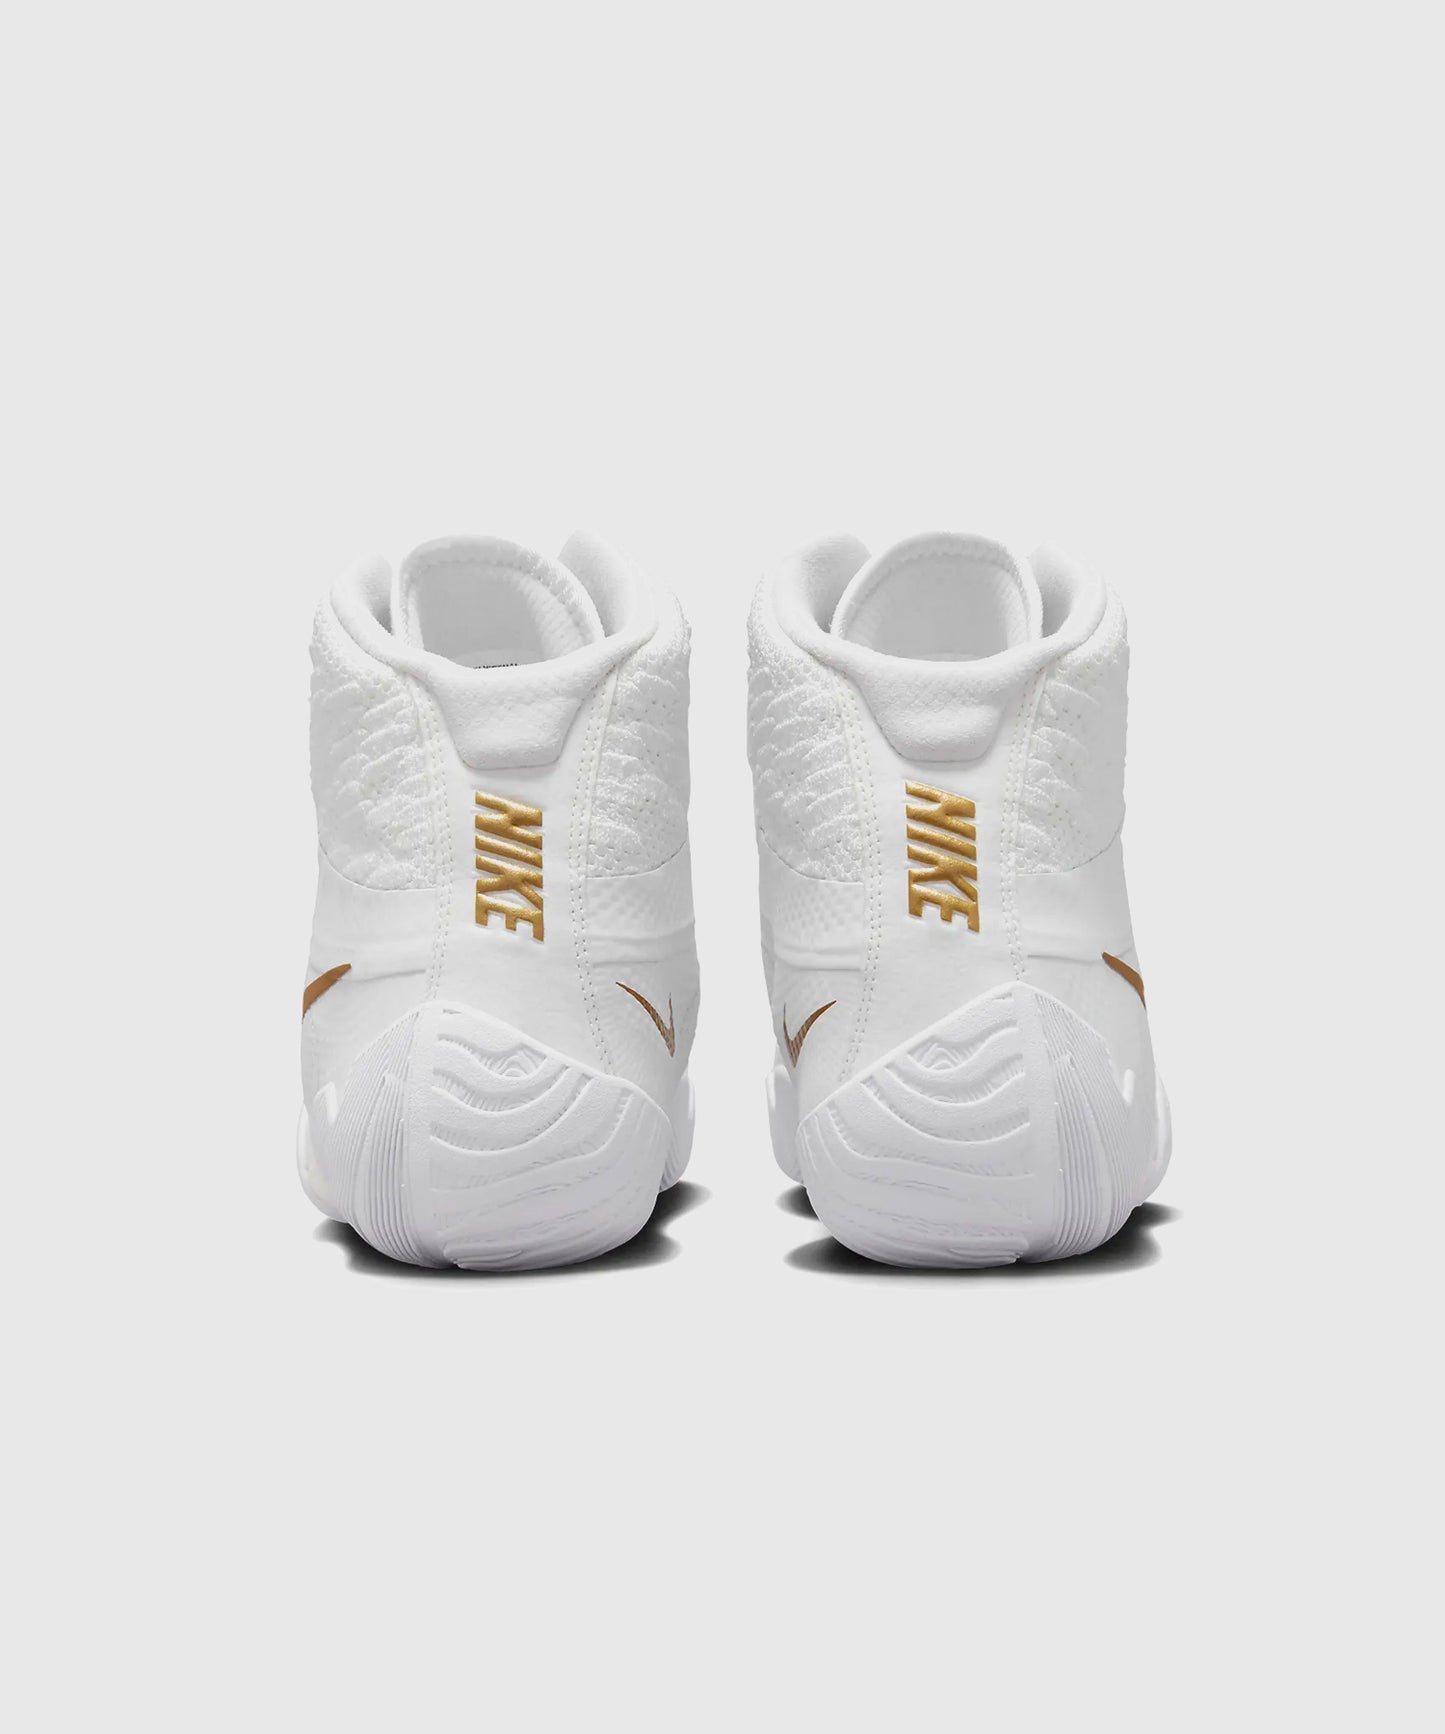 Nike Tawa Wrestlingschuh Weiß/Metallic Gold